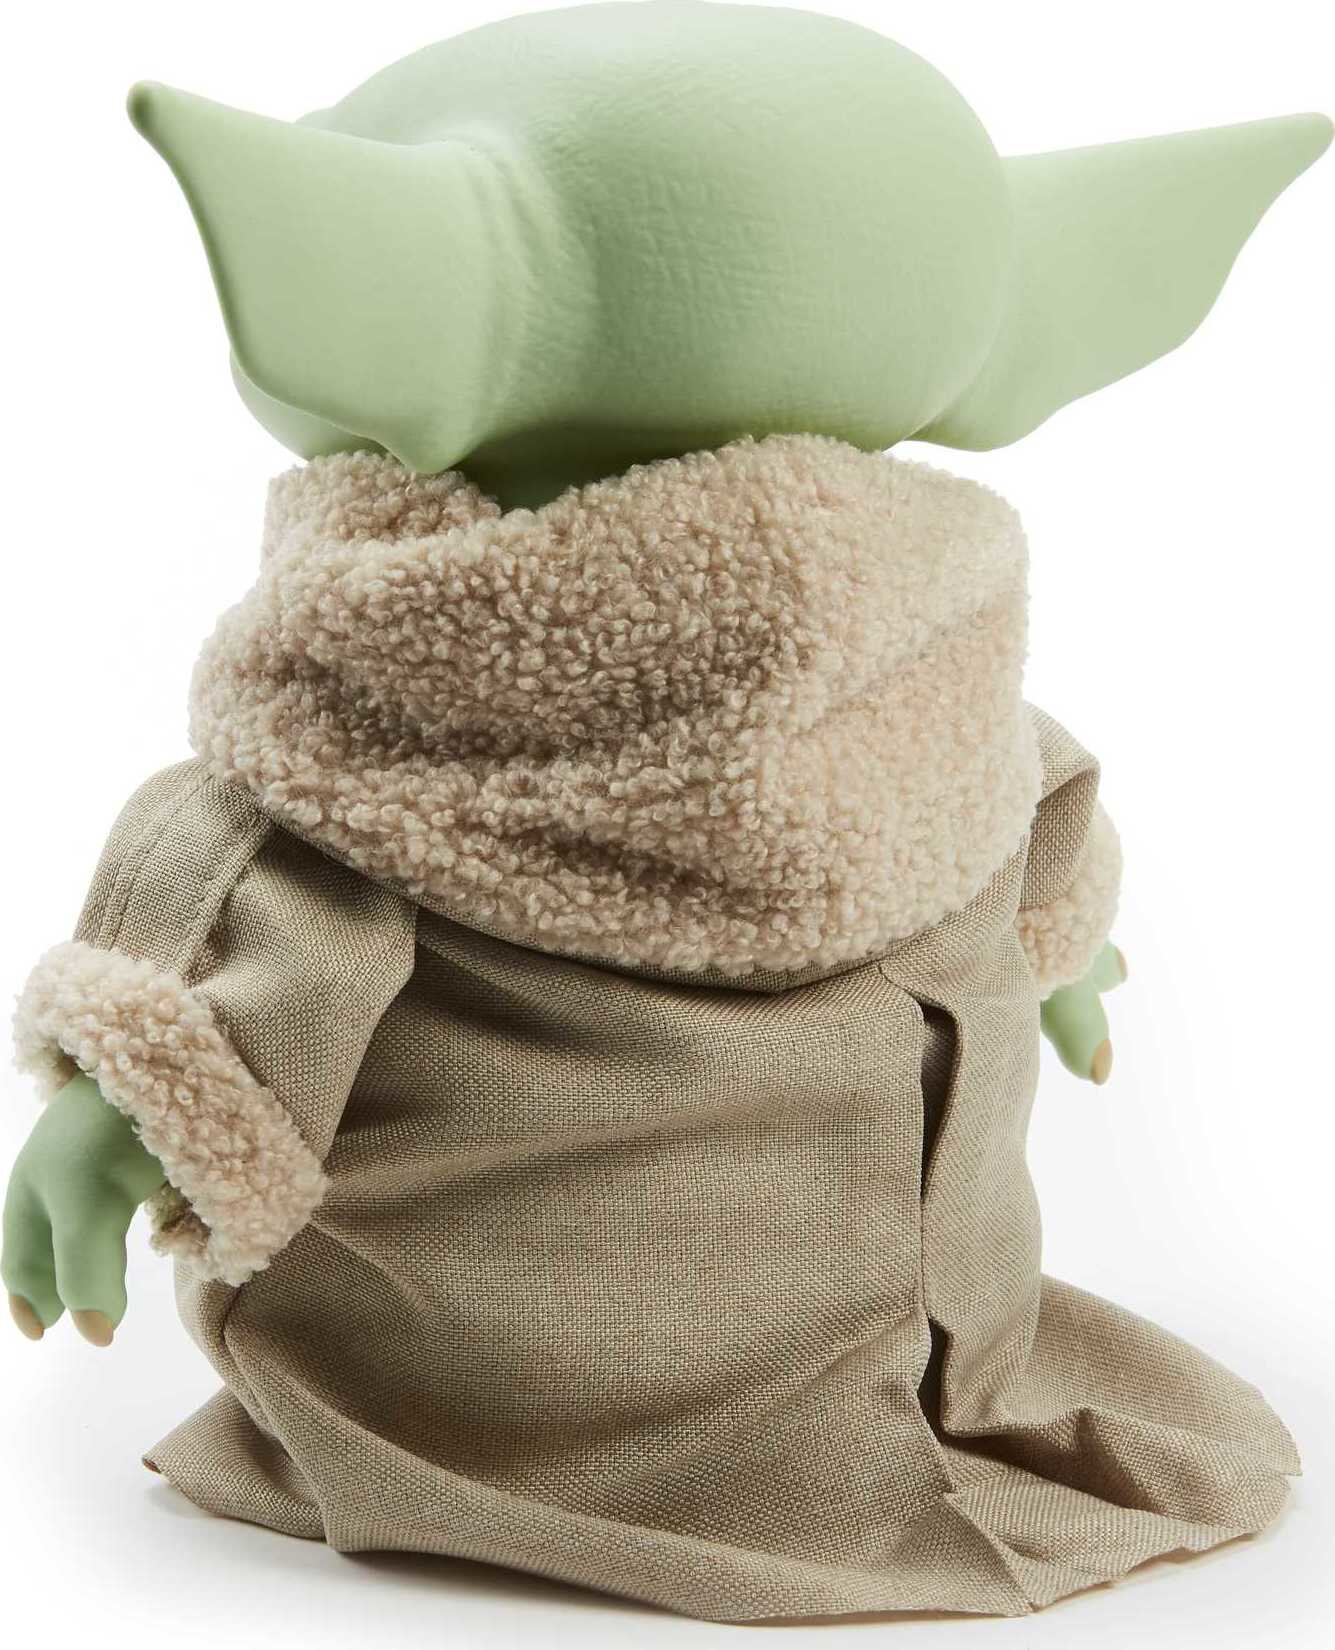 Star Wars The Mandalorian Grogu Plush Toy with Soft Body, 11-inch ...